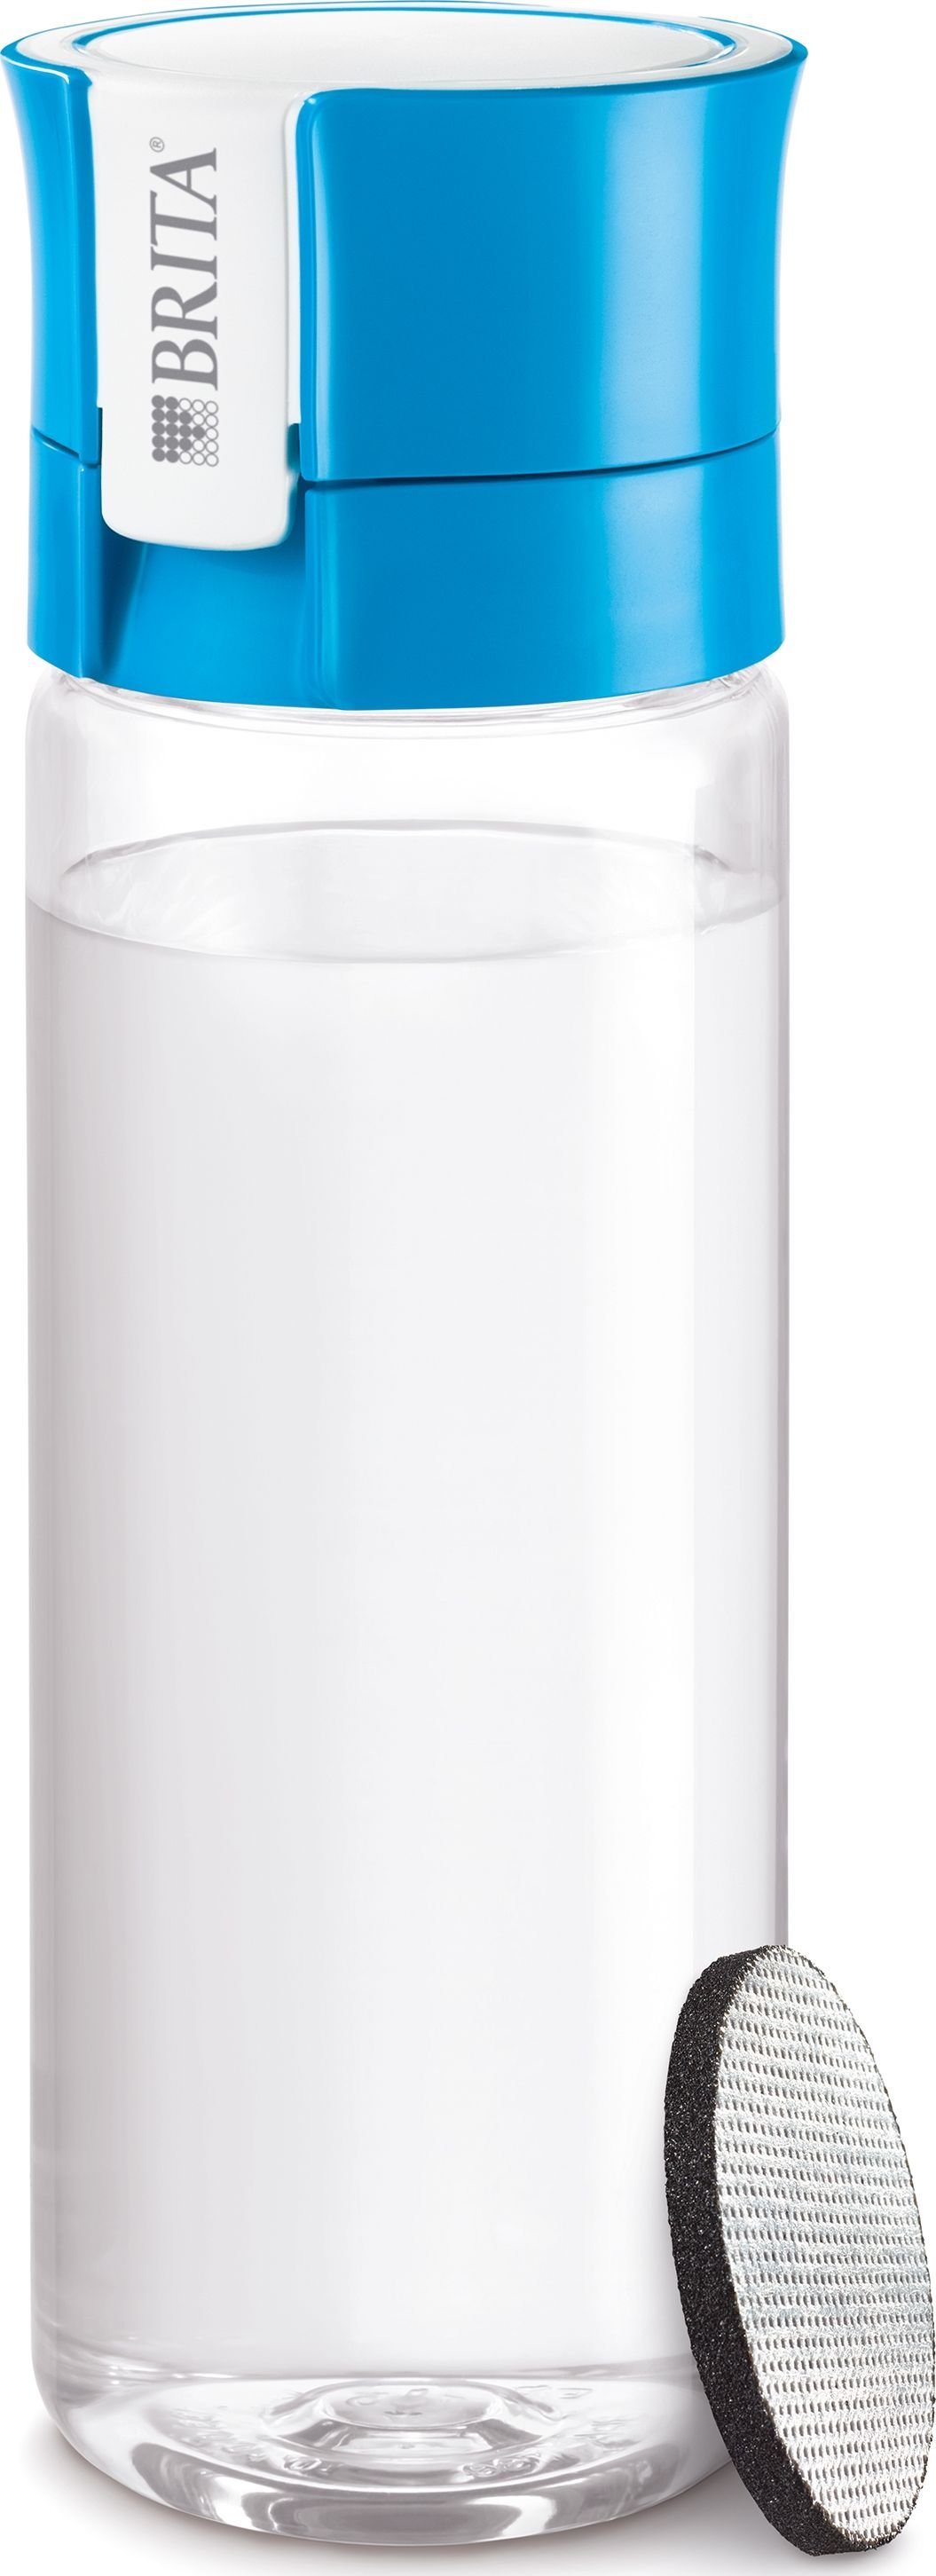 Sticla Brita pentru filtrarea apei , model Fill&amp;Go Vital albastra, 600 ml